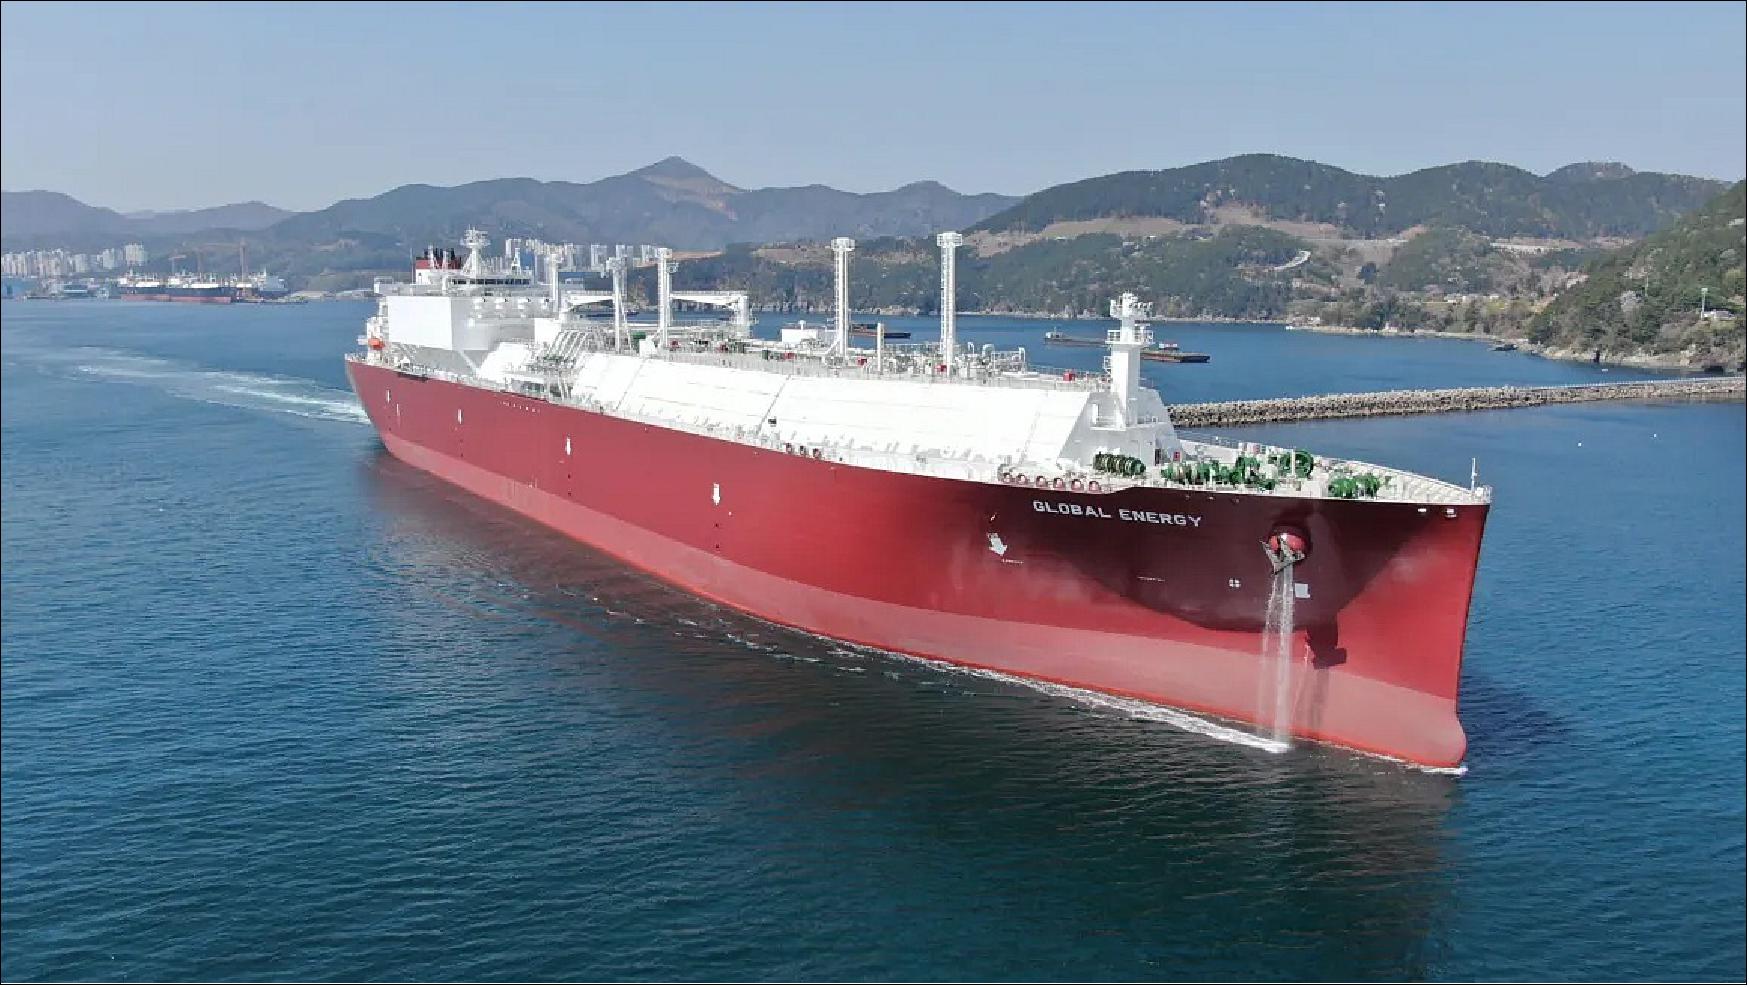 Figure 96: Nakilat LNG carrier Global Energy (image credit: Nakilat)